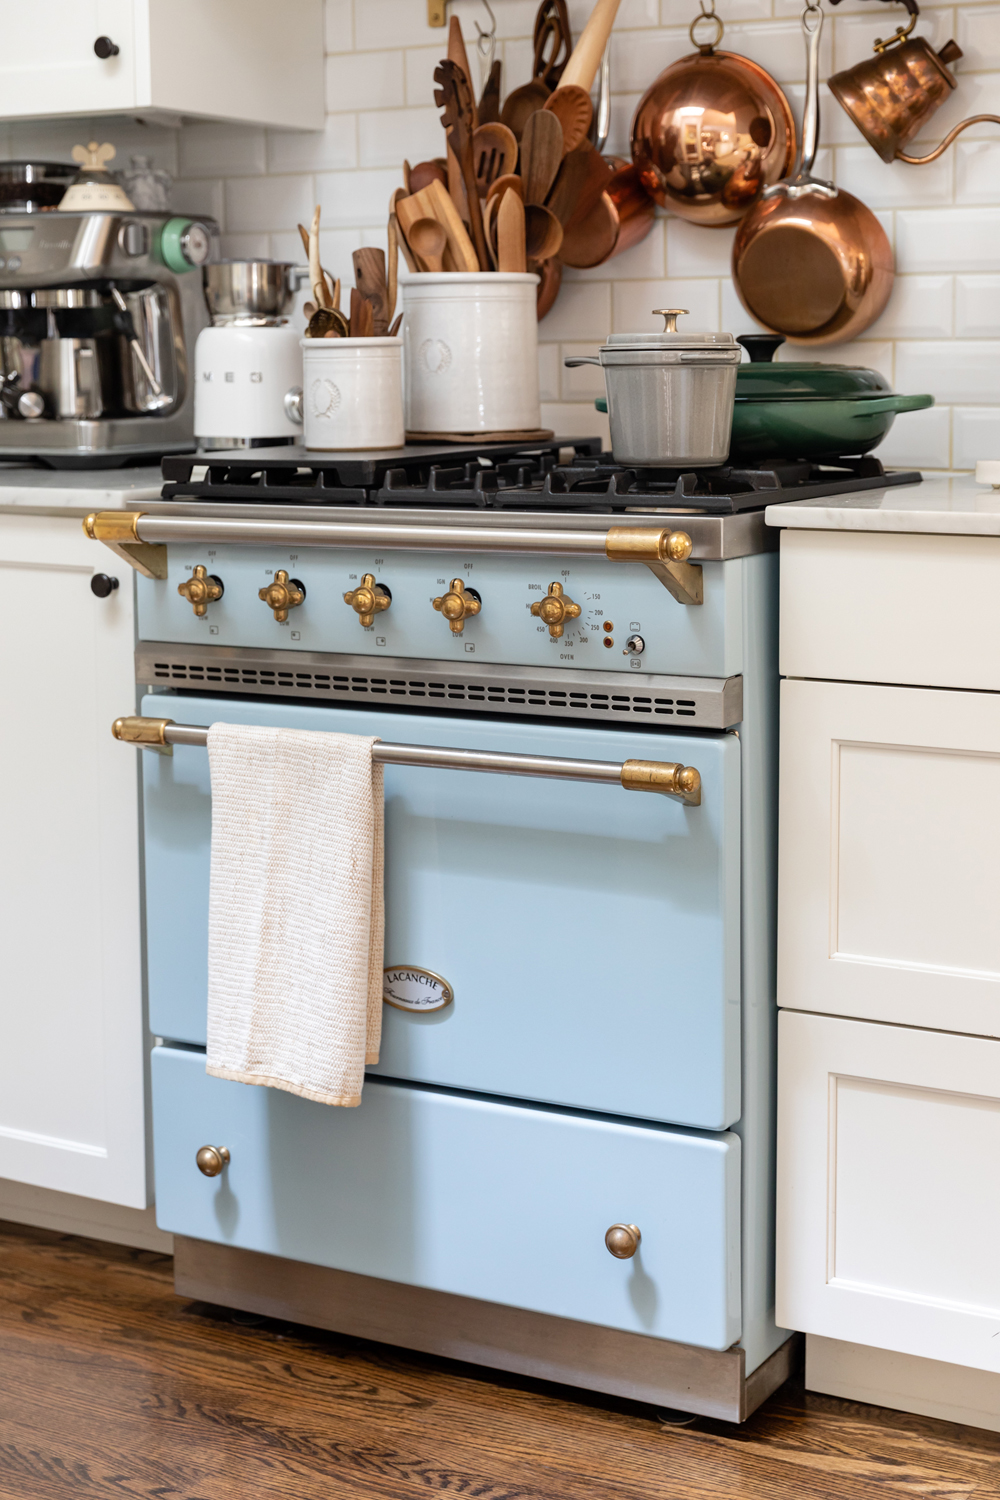 Light blue stove in Marcella's kitchen